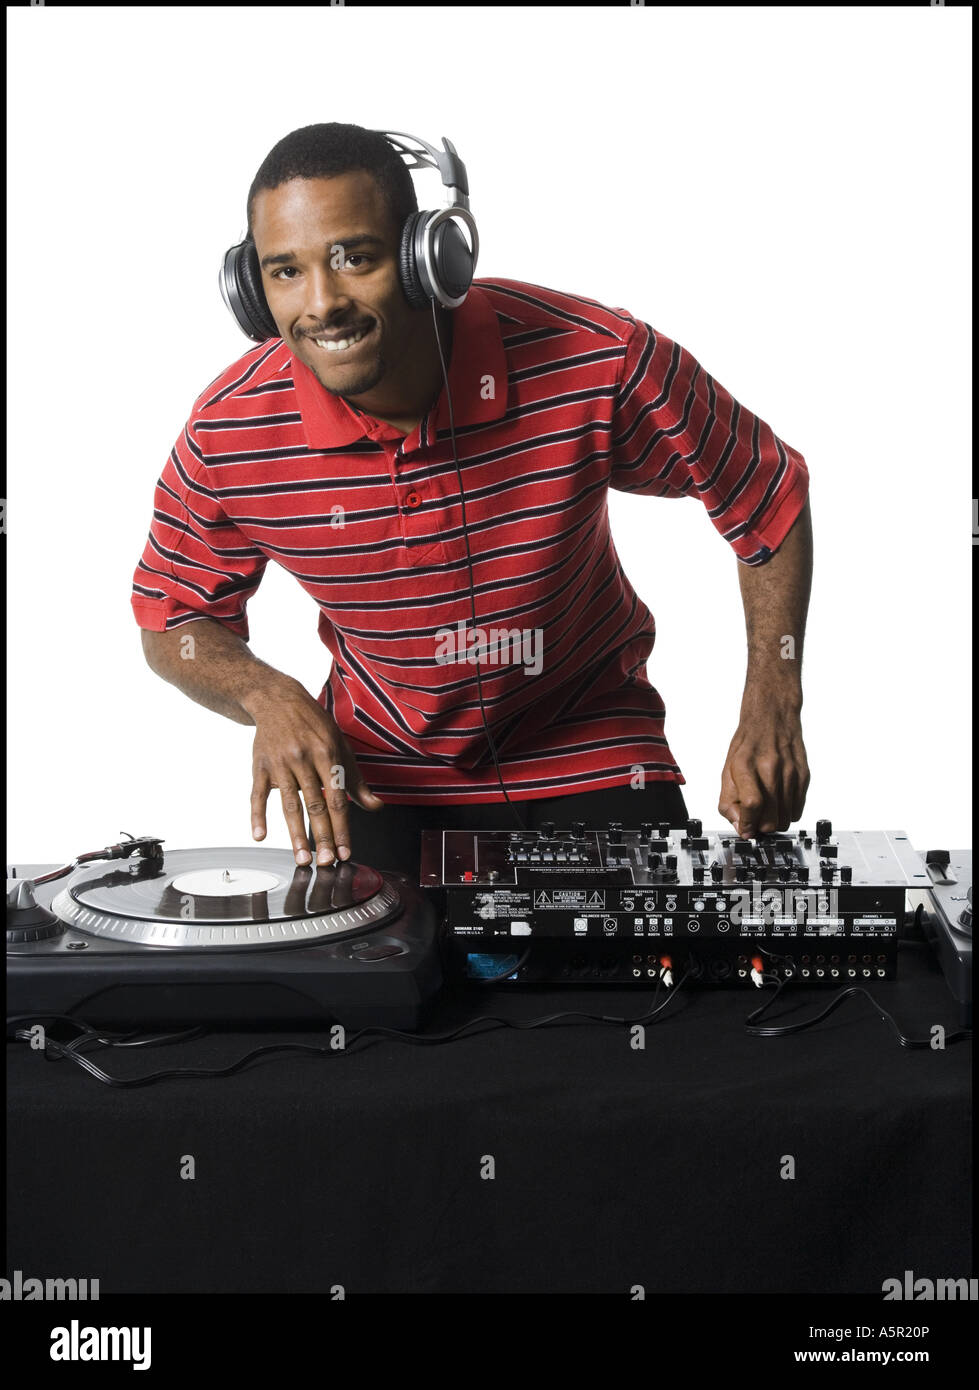 DJ with headphones spinning records Stock Photo - Alamy